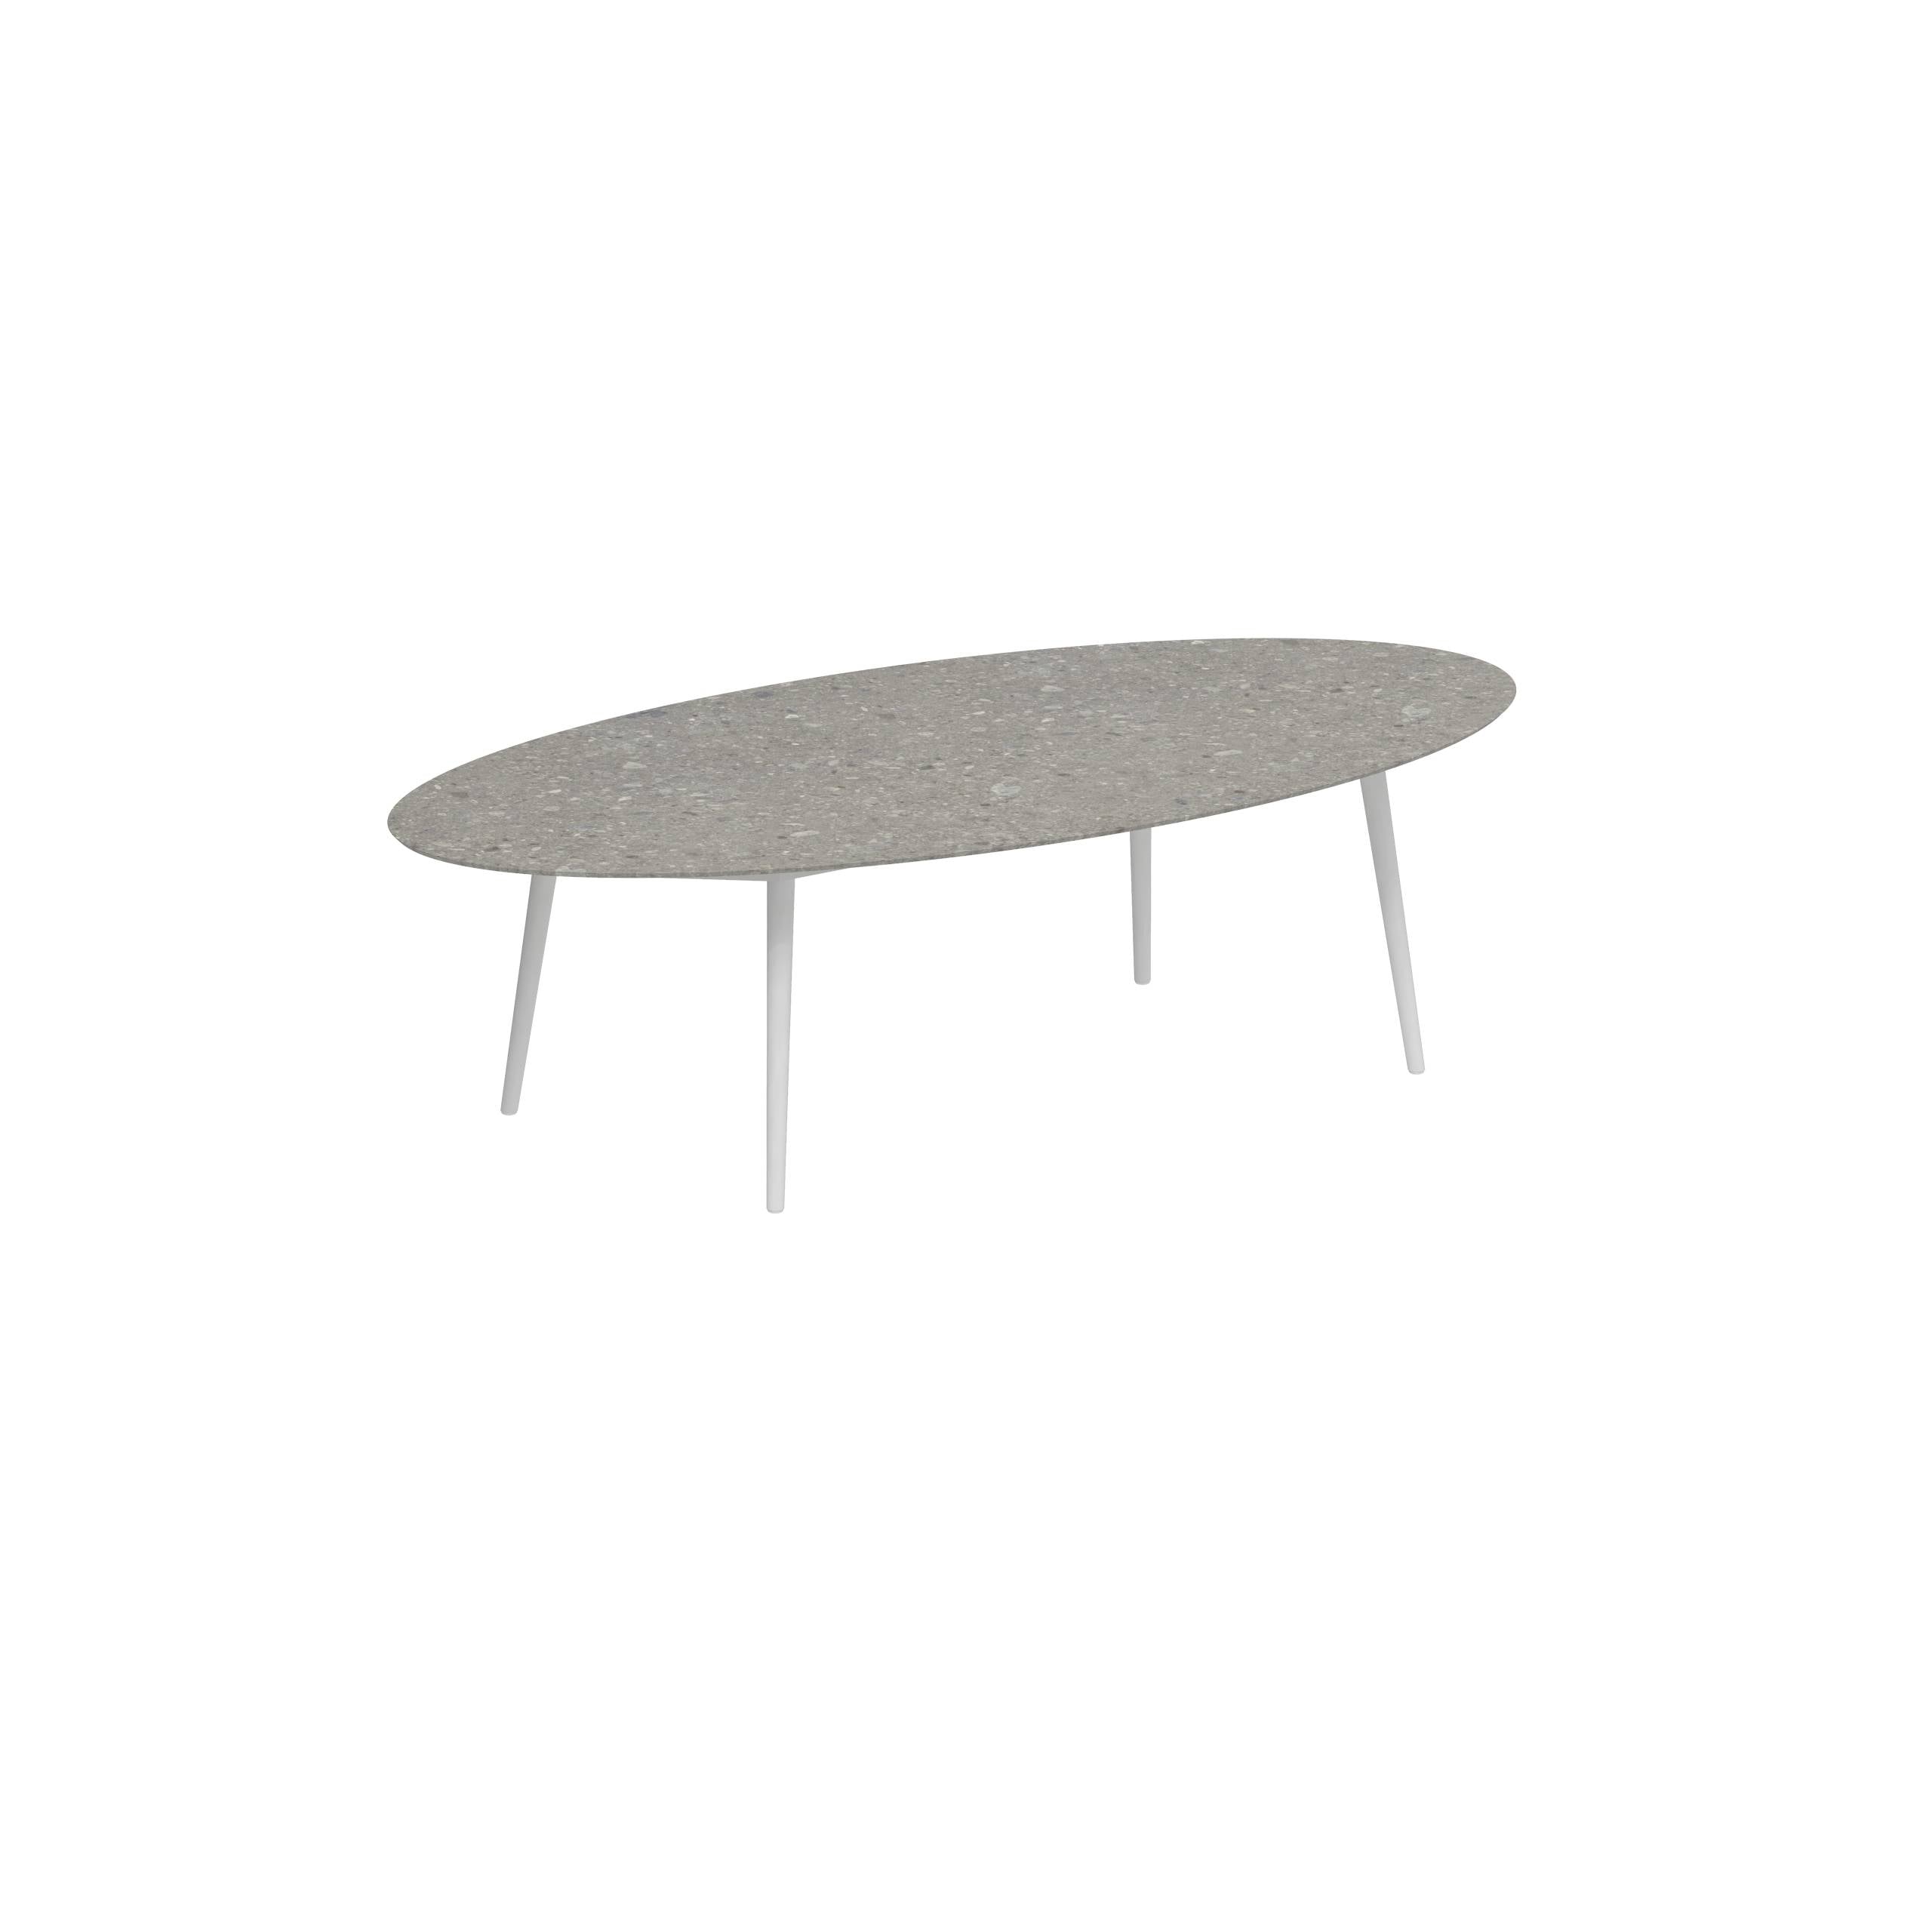 Styletto Low Dining Table 250x130cm Alu Legs White Ceramic Tabletop Ceppo Dolomitica